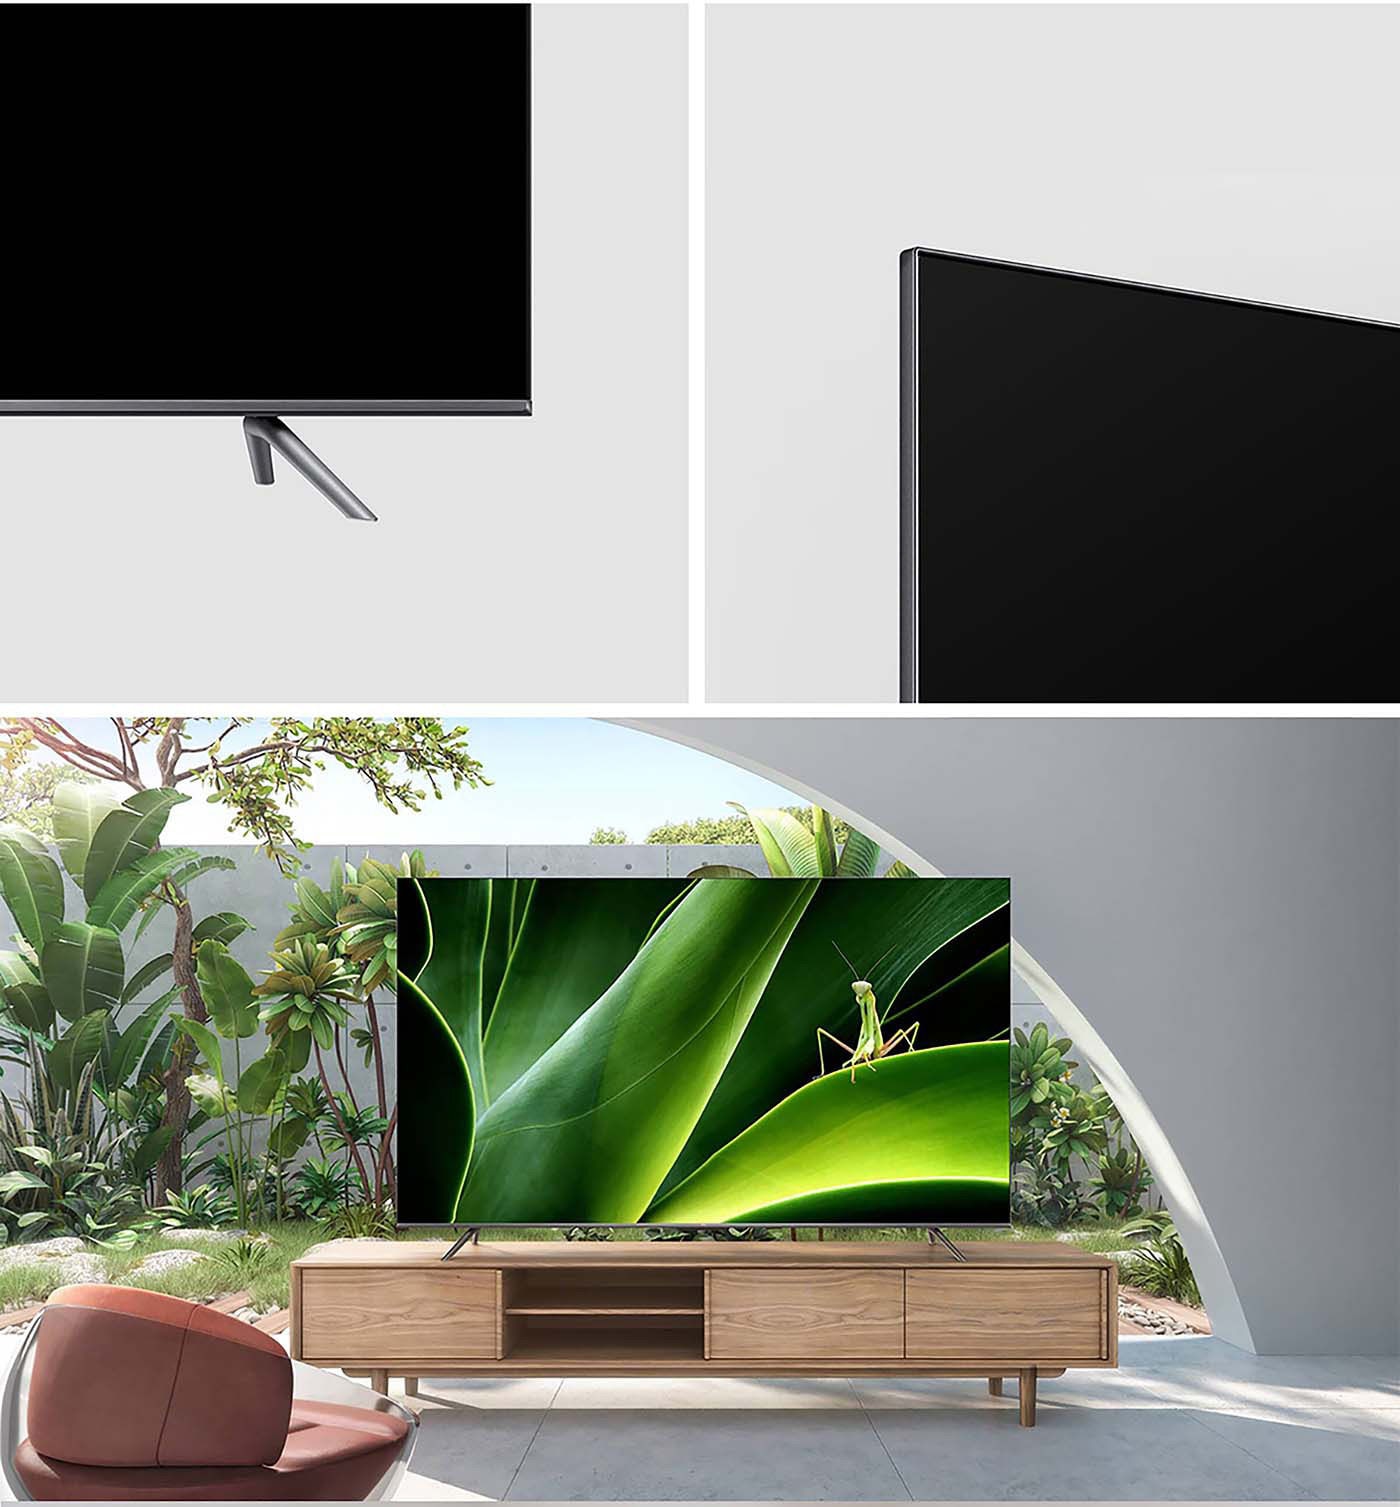 TCL 50吋 4K UHD Google TV 電視超越邊界超越限制，無邊設計提供更寬廣的視覺體驗，在所有動作中感覺恰到好處